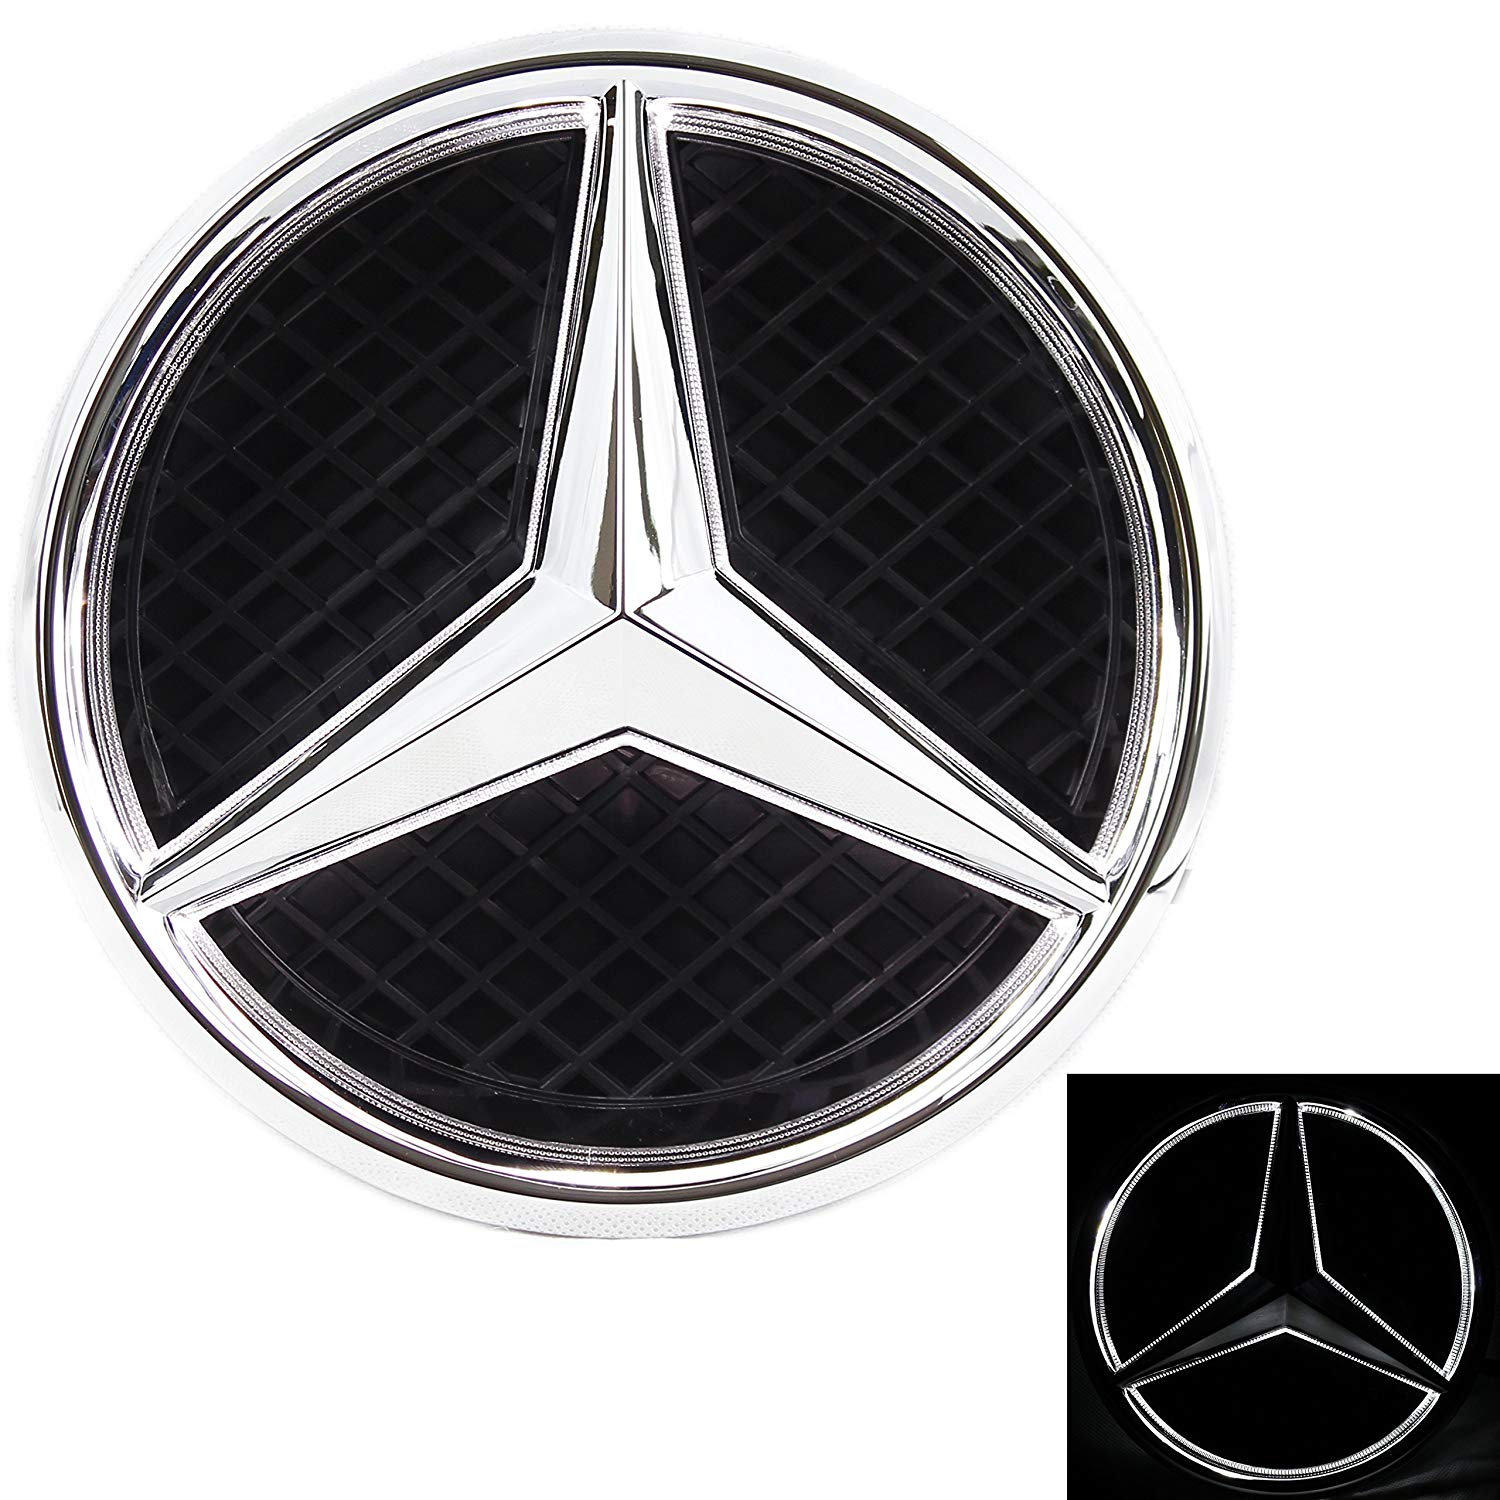 Benz Black Logo - Amazon.com: JetStyle LED Emblem for Mercedes Benz 2011-2018, Front ...